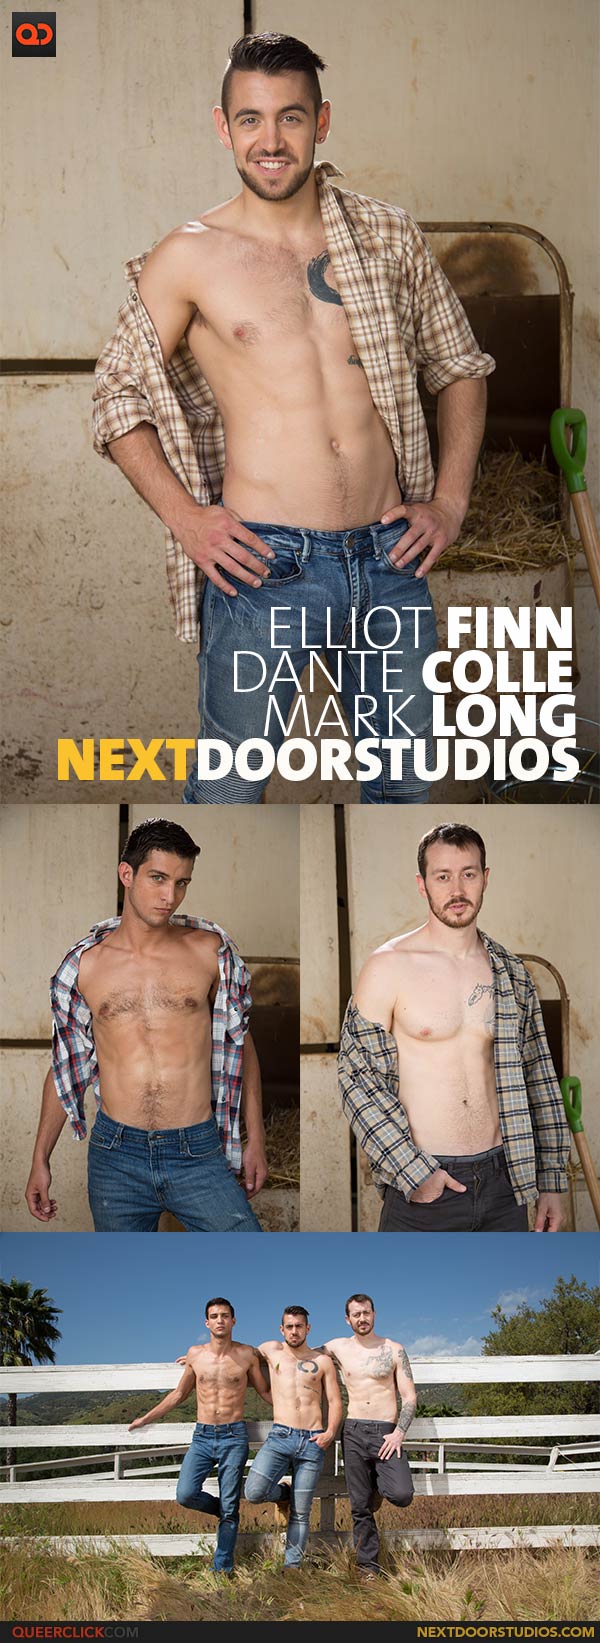 Next Door Studios:  Mark Long, Dante Colle and Elliot Finn